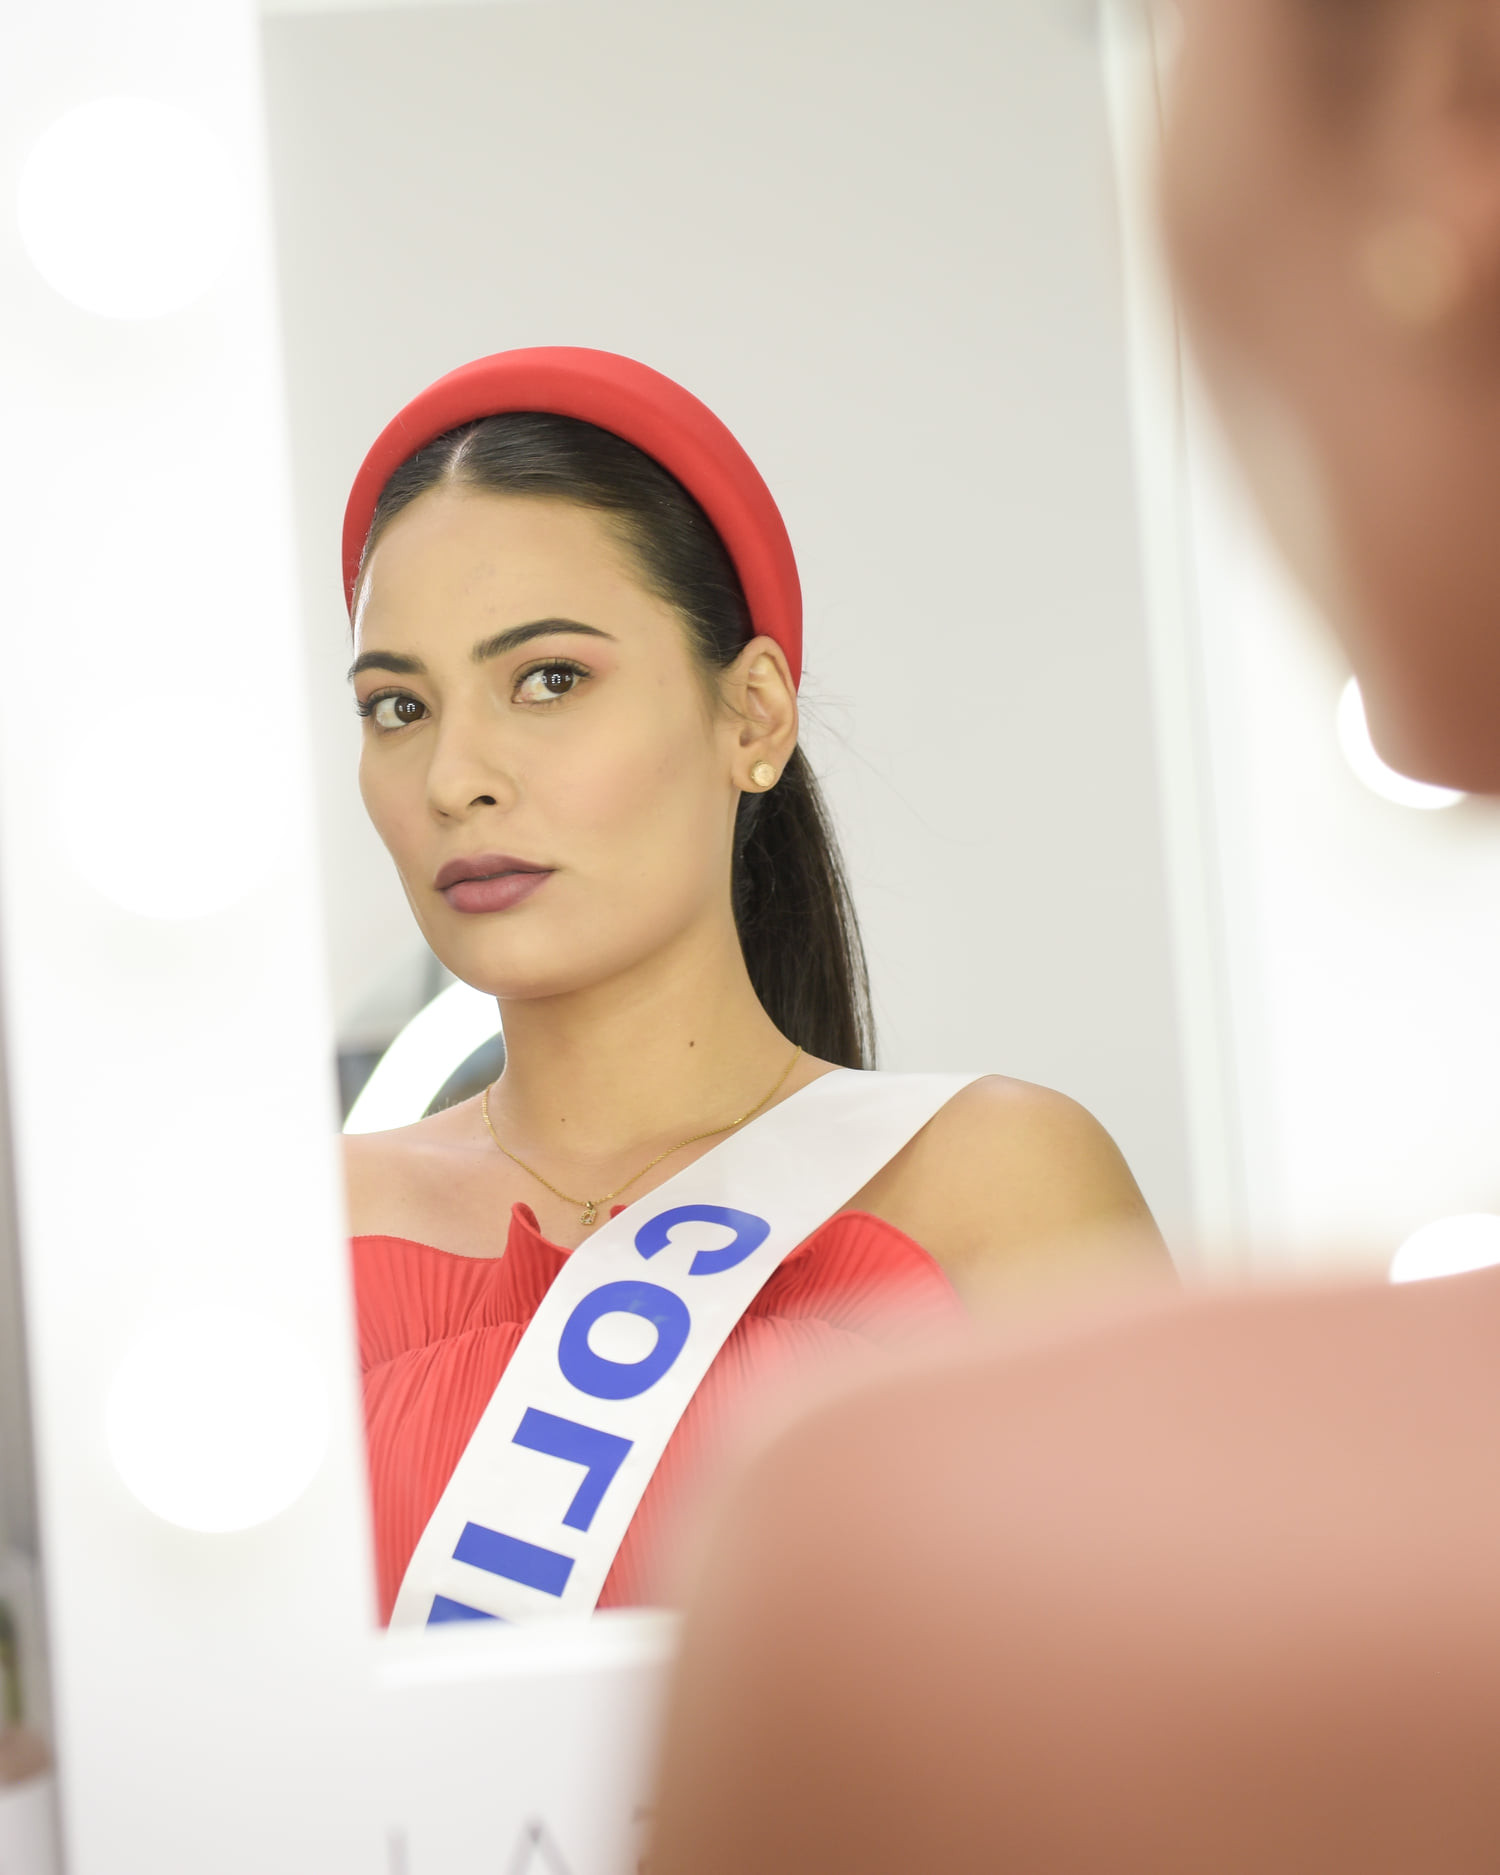 MissMexicoOrg - candidatas a miss mexico 2021, final: 1 july. - Página 37 OFhsyu